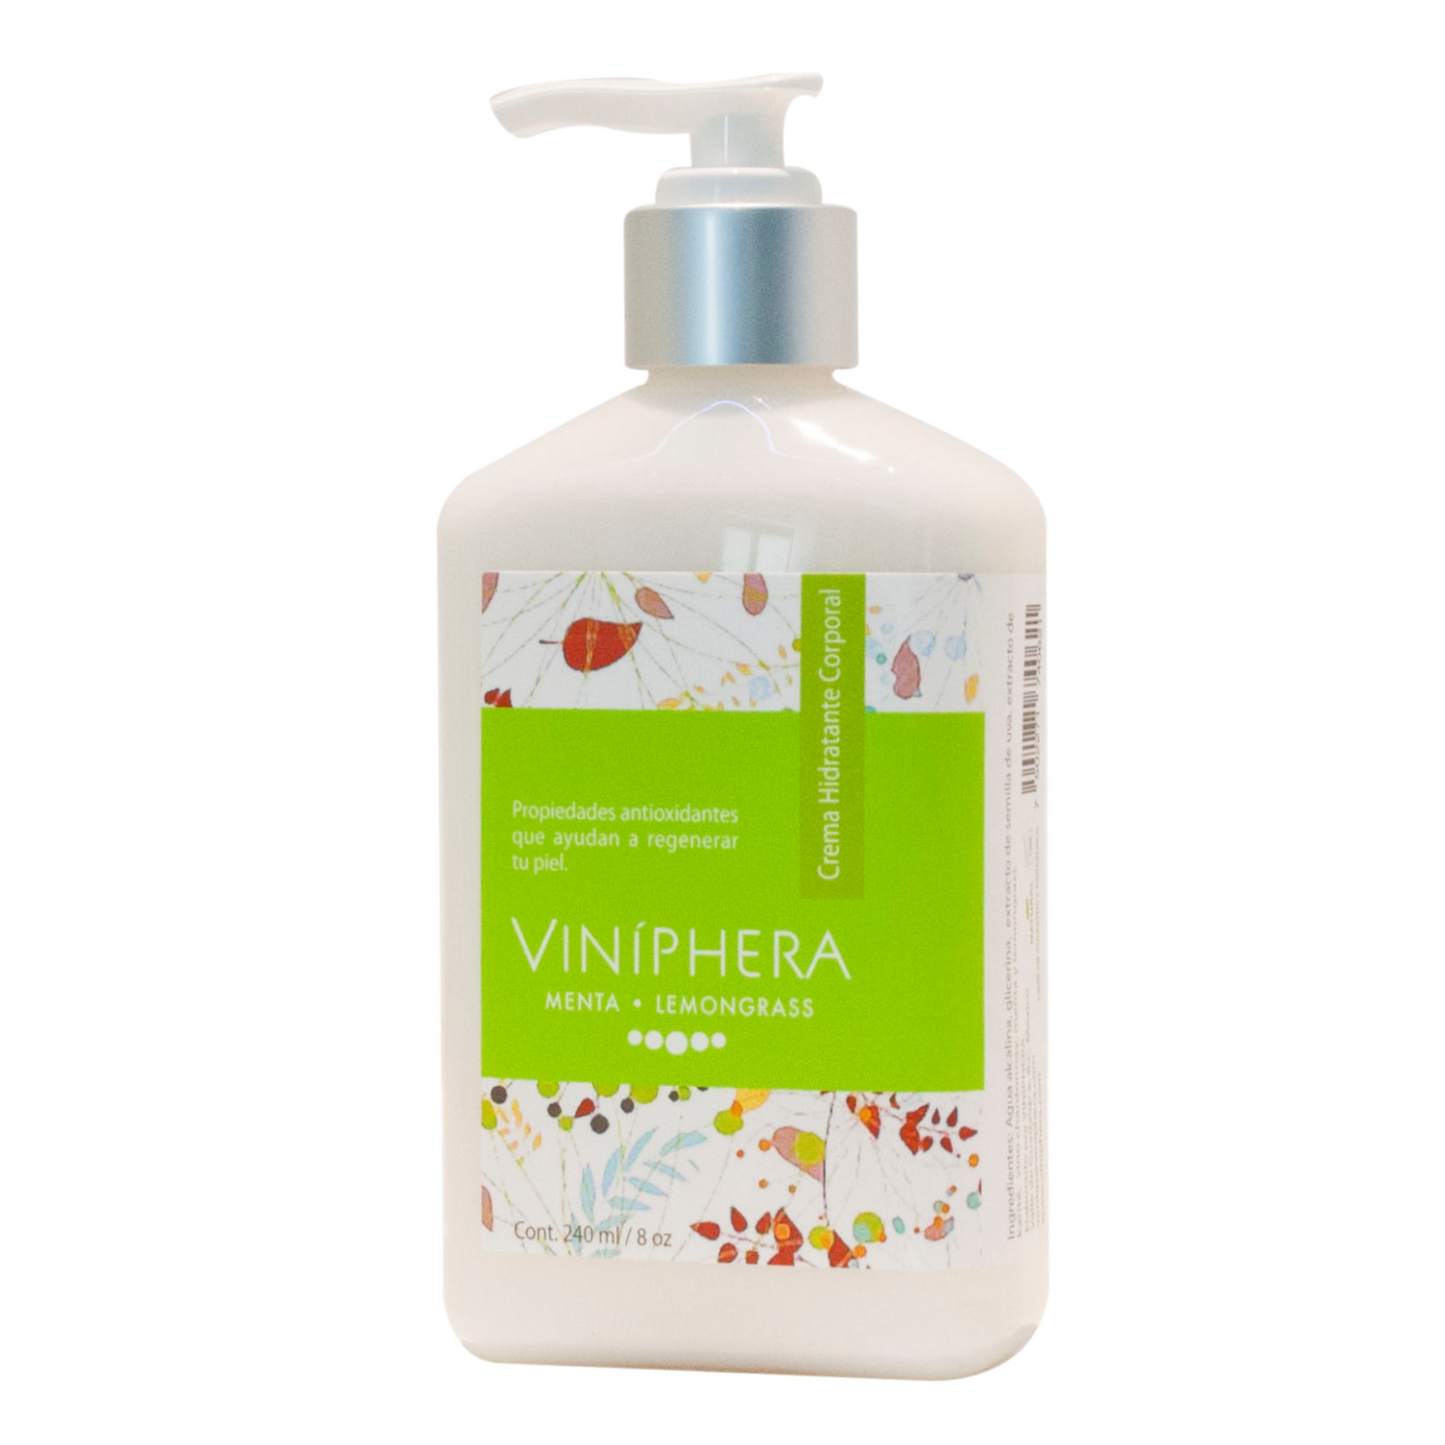 Viniphera- Crema corporal antioxidante Lemongrass